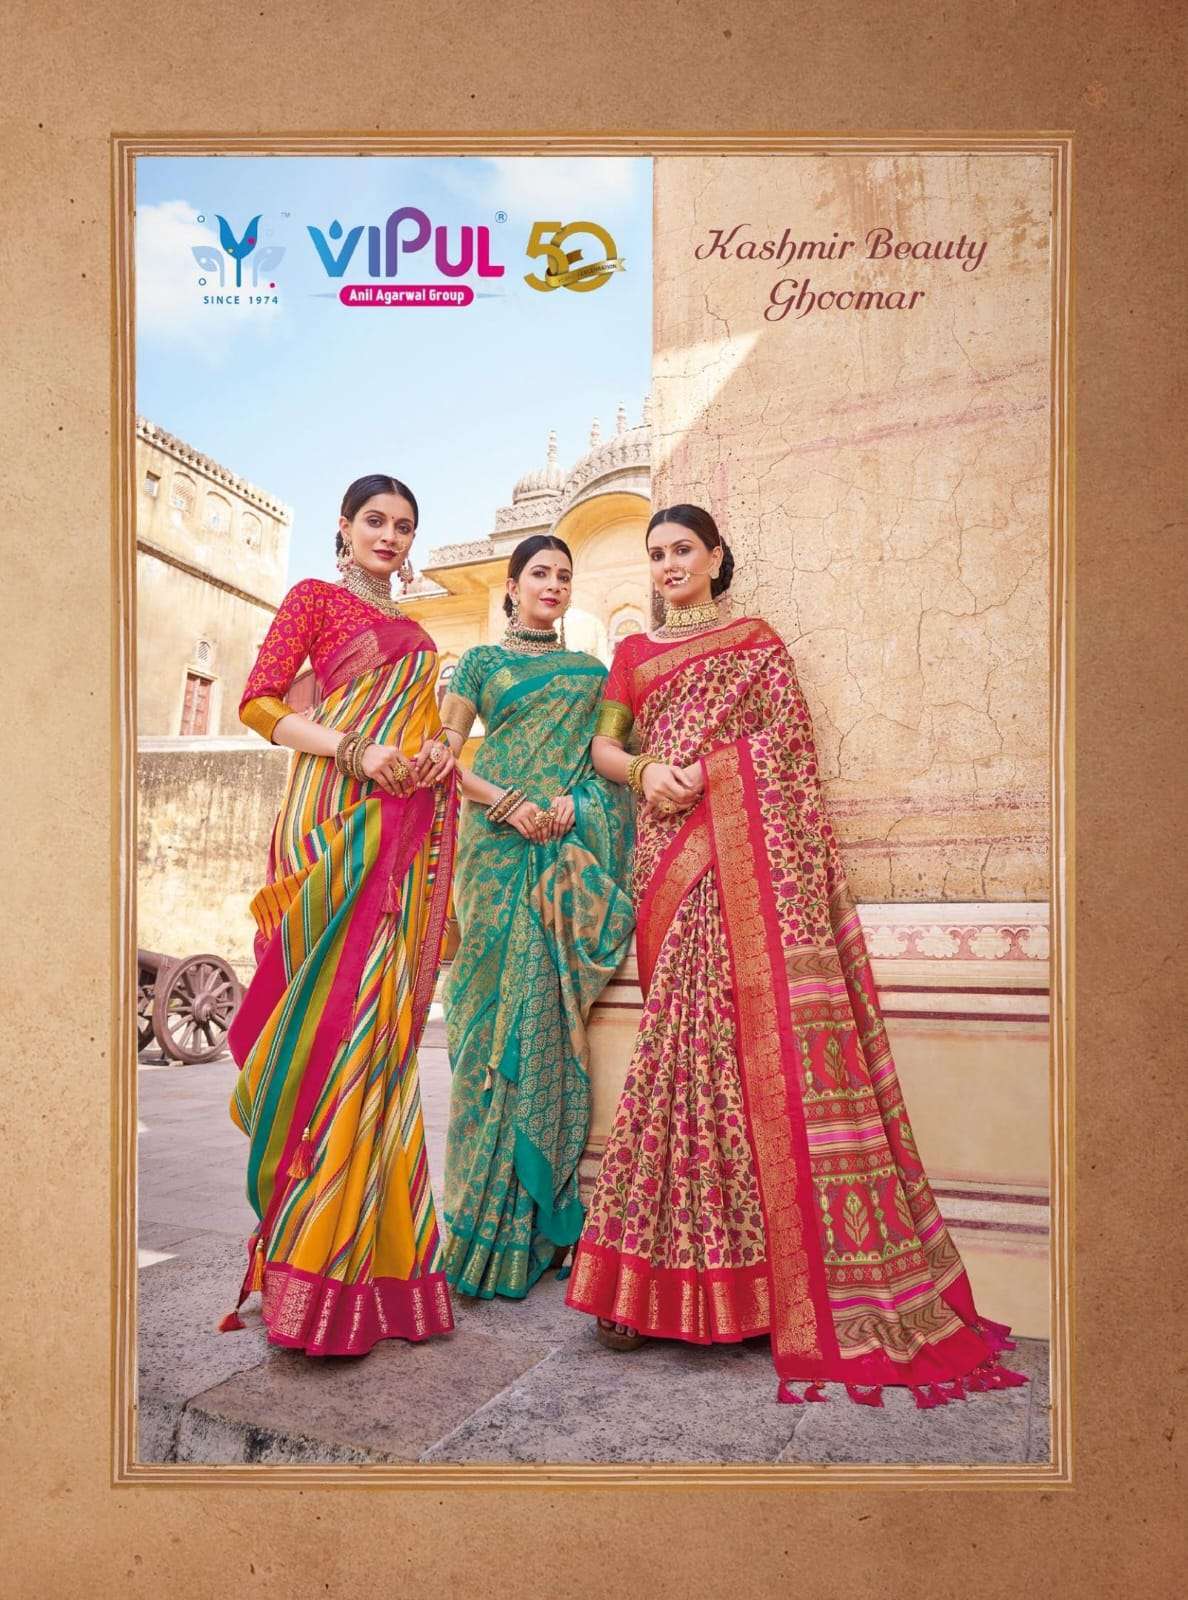 Vipul fashion Kashmir Beauty Ghoomar Silk with Amazing Print...